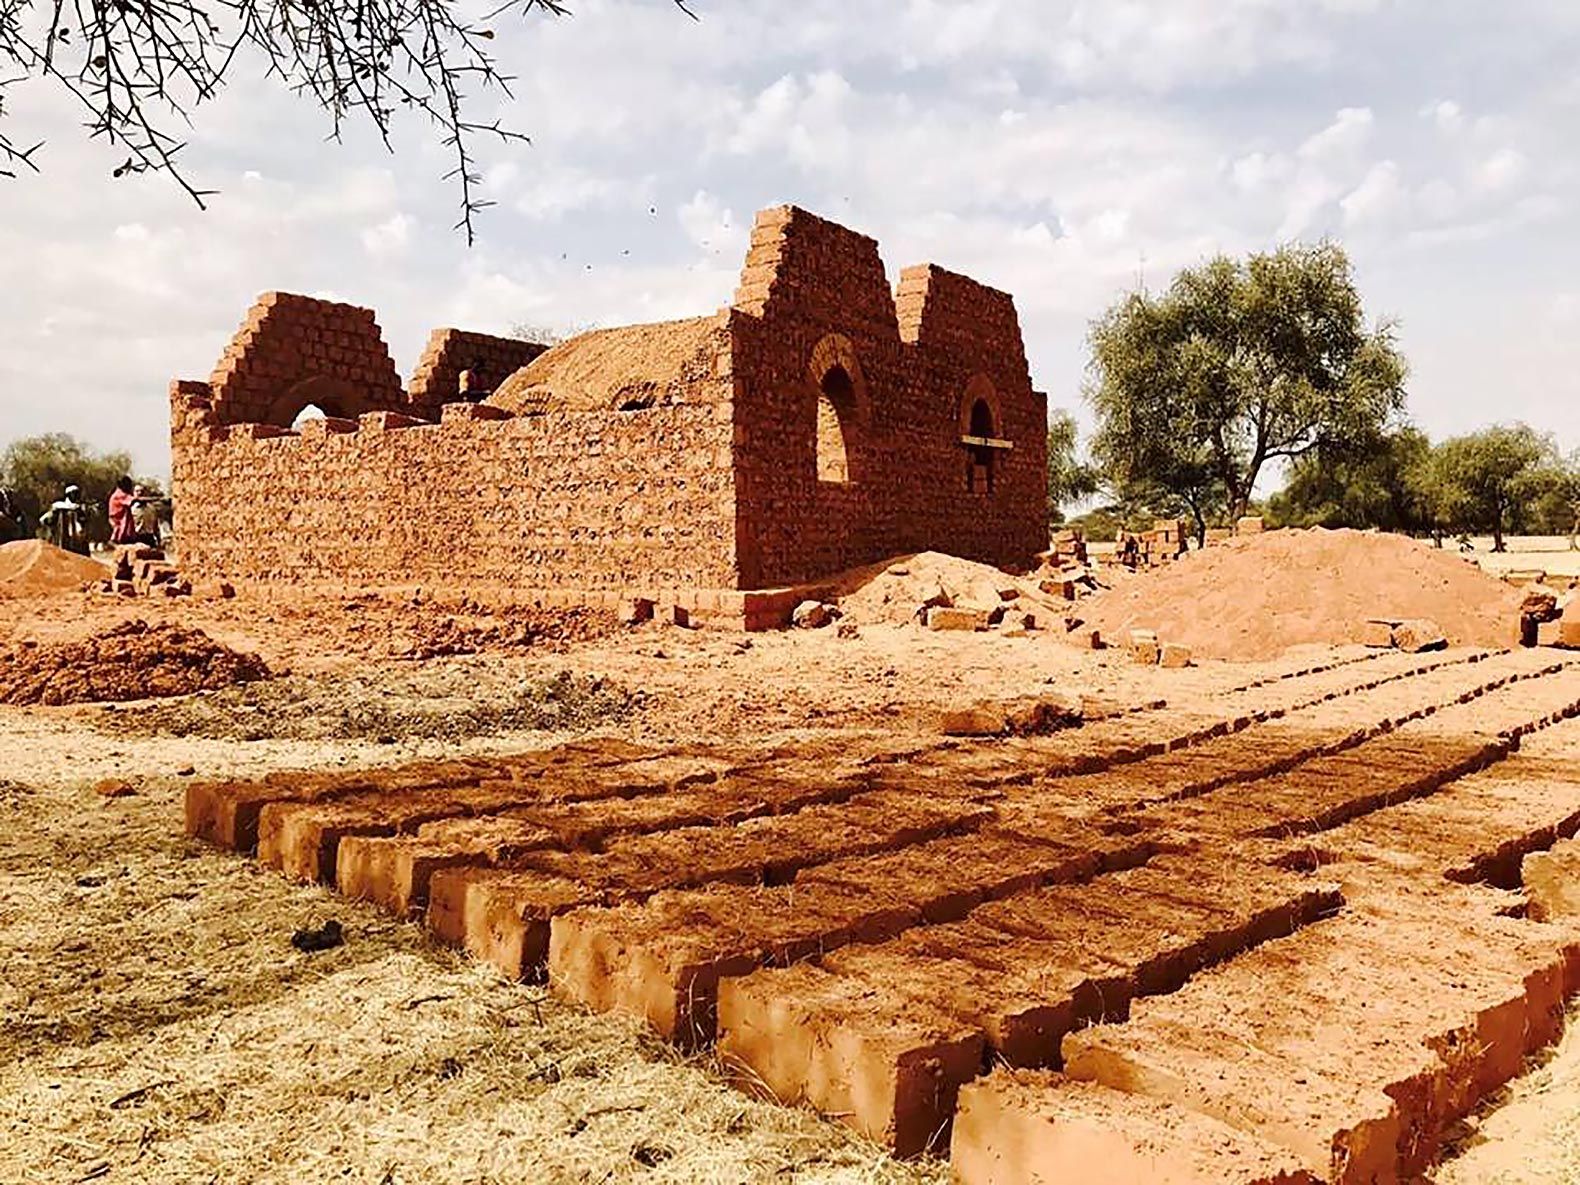 The Nubian Vault Association Mud Bricks